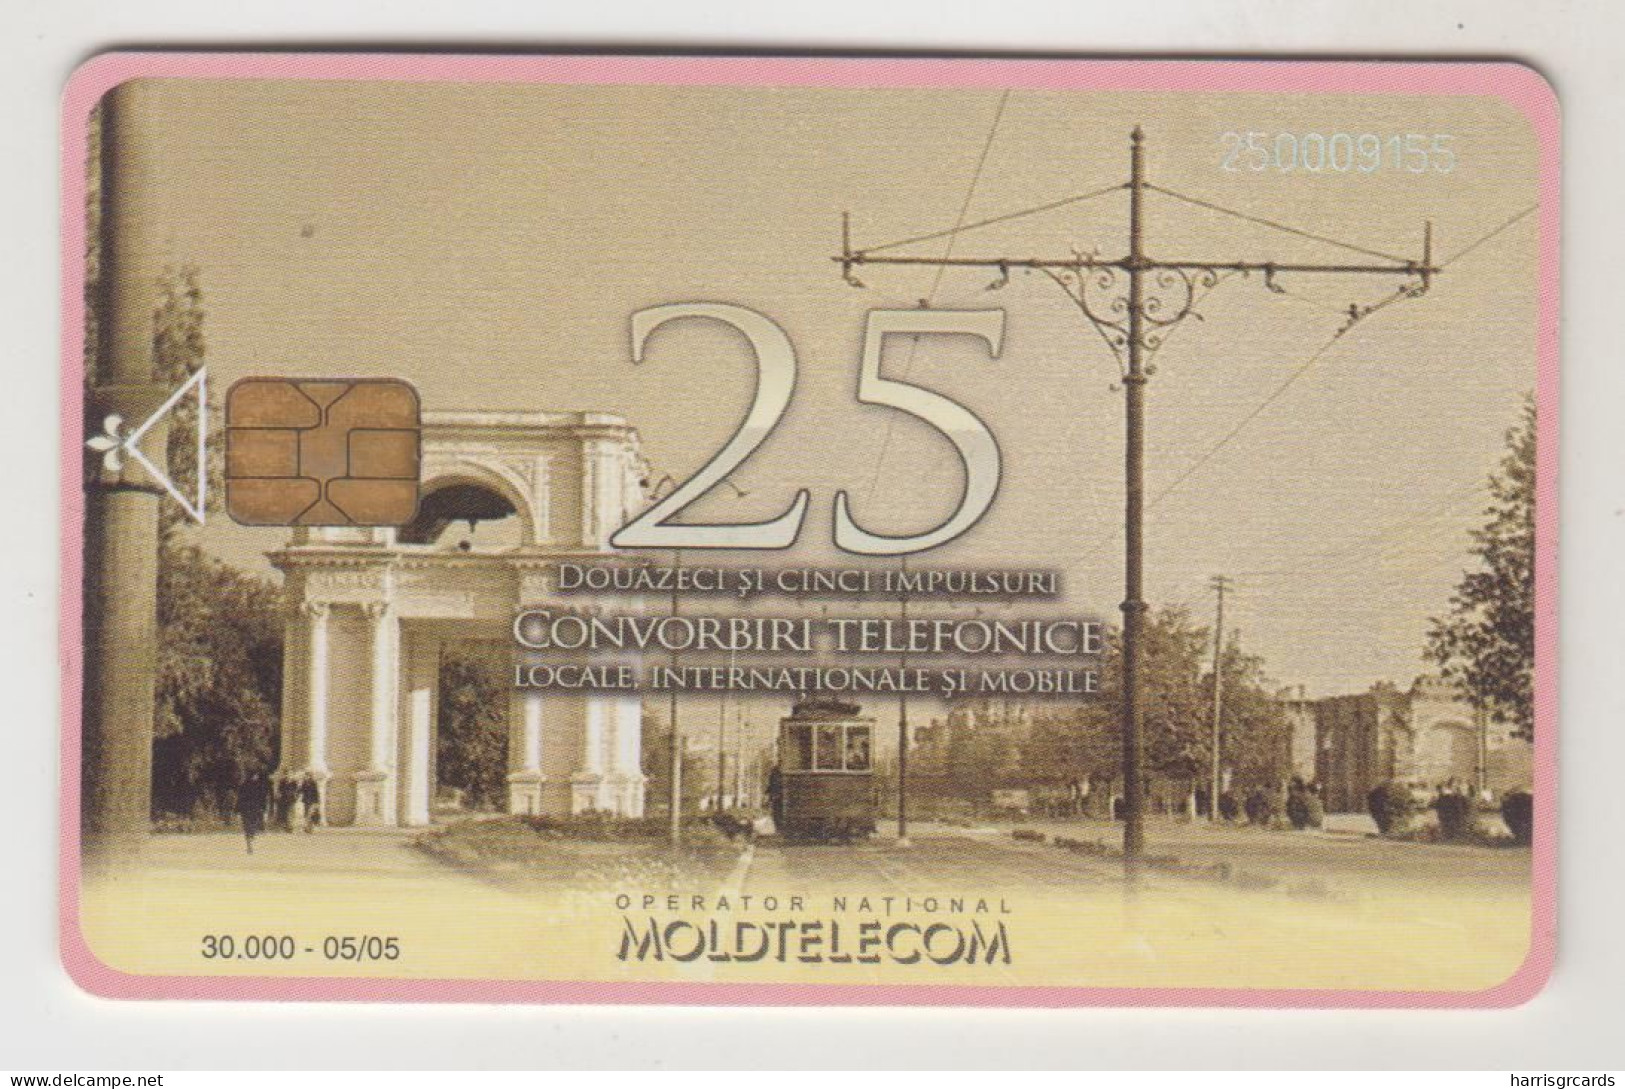 MOLDOVA - Strada Alexandru Cel Bun, Chip:CHT08, Moldtelecom 25 Units, 05/05, Tirage 30.000,used - Moldavie